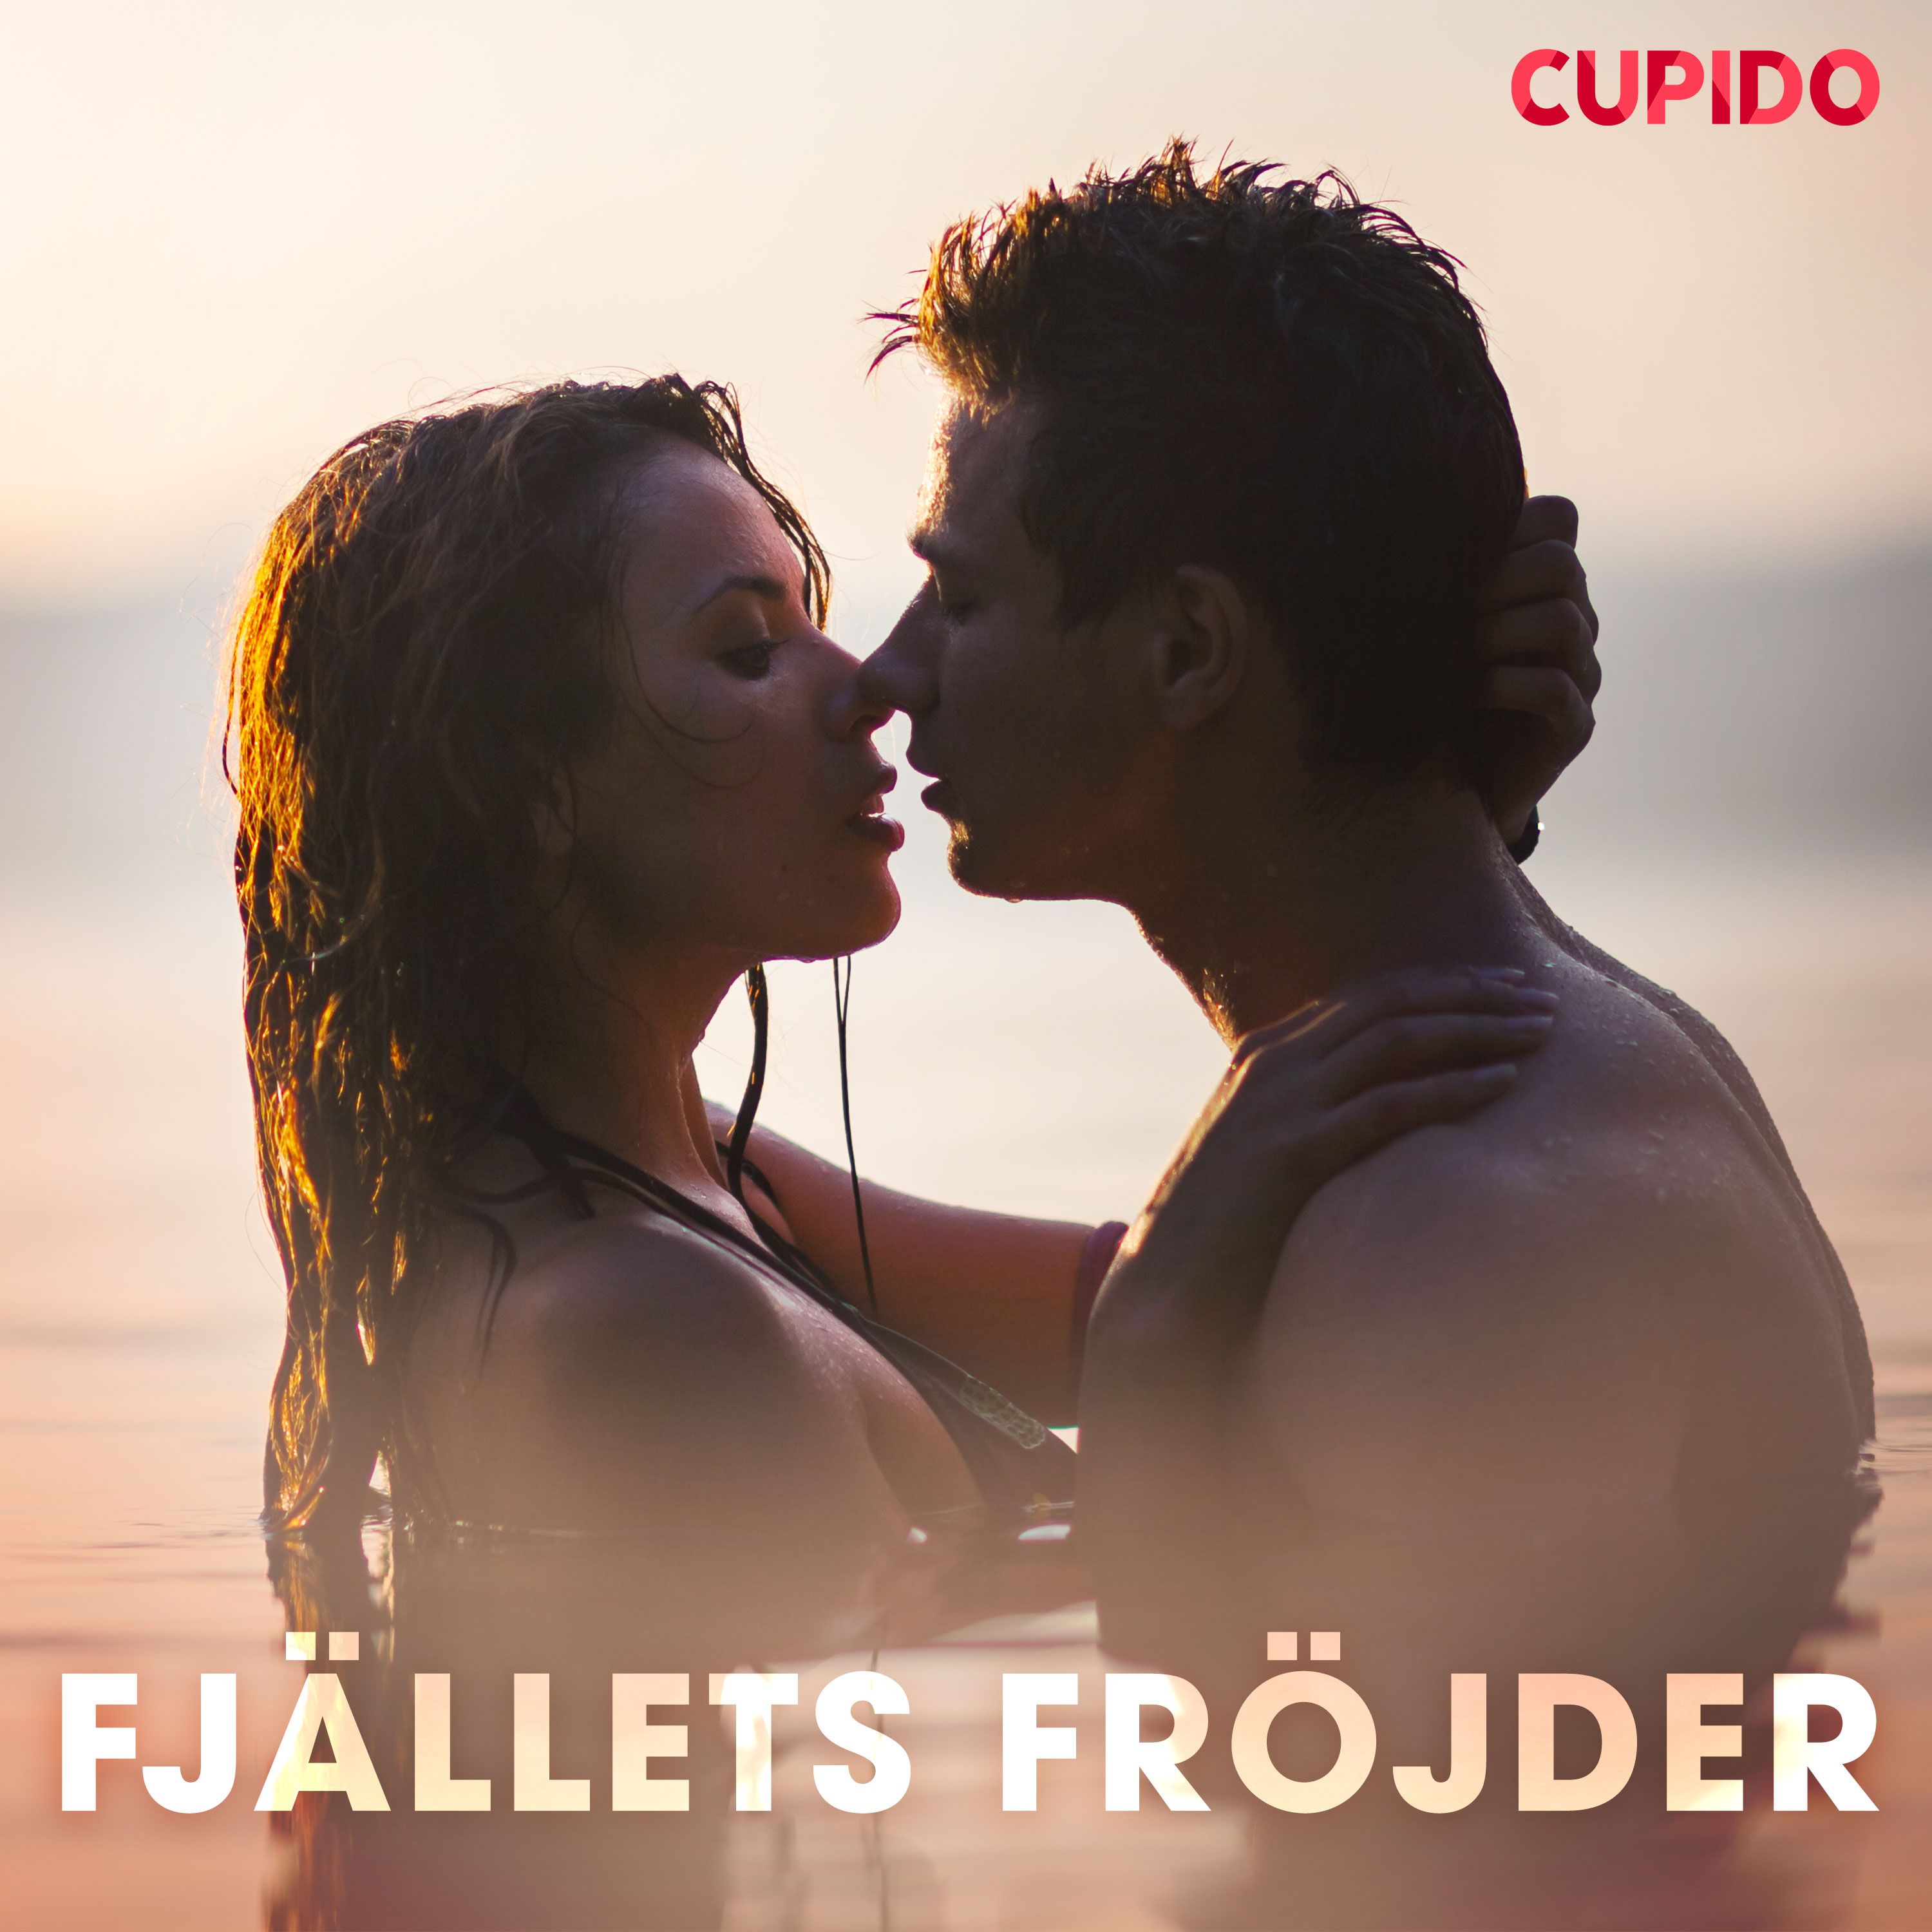 Fjällets fröjder, audiobook by Cupido